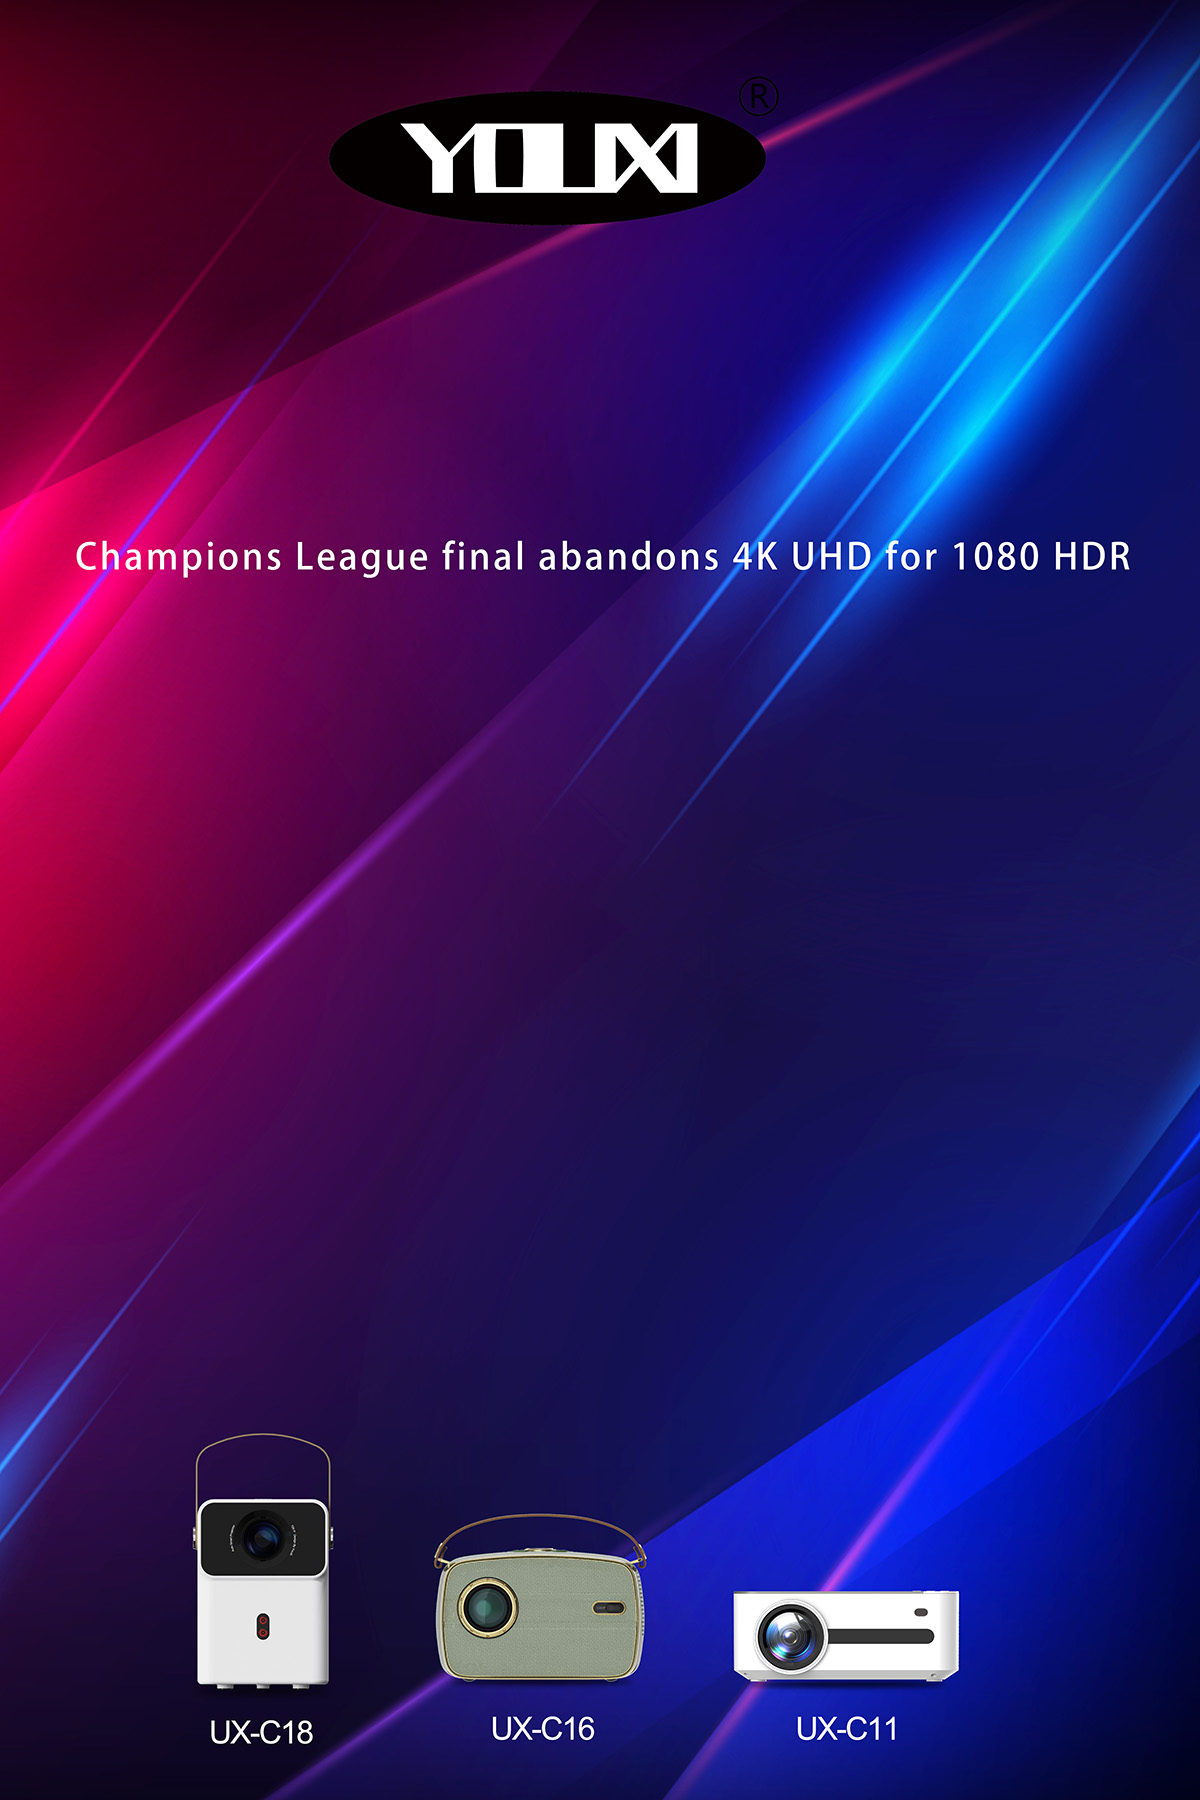 نهائي دوري أبطال أوروبا يتخلى عن 4K UHD مقابل 1080 HDR